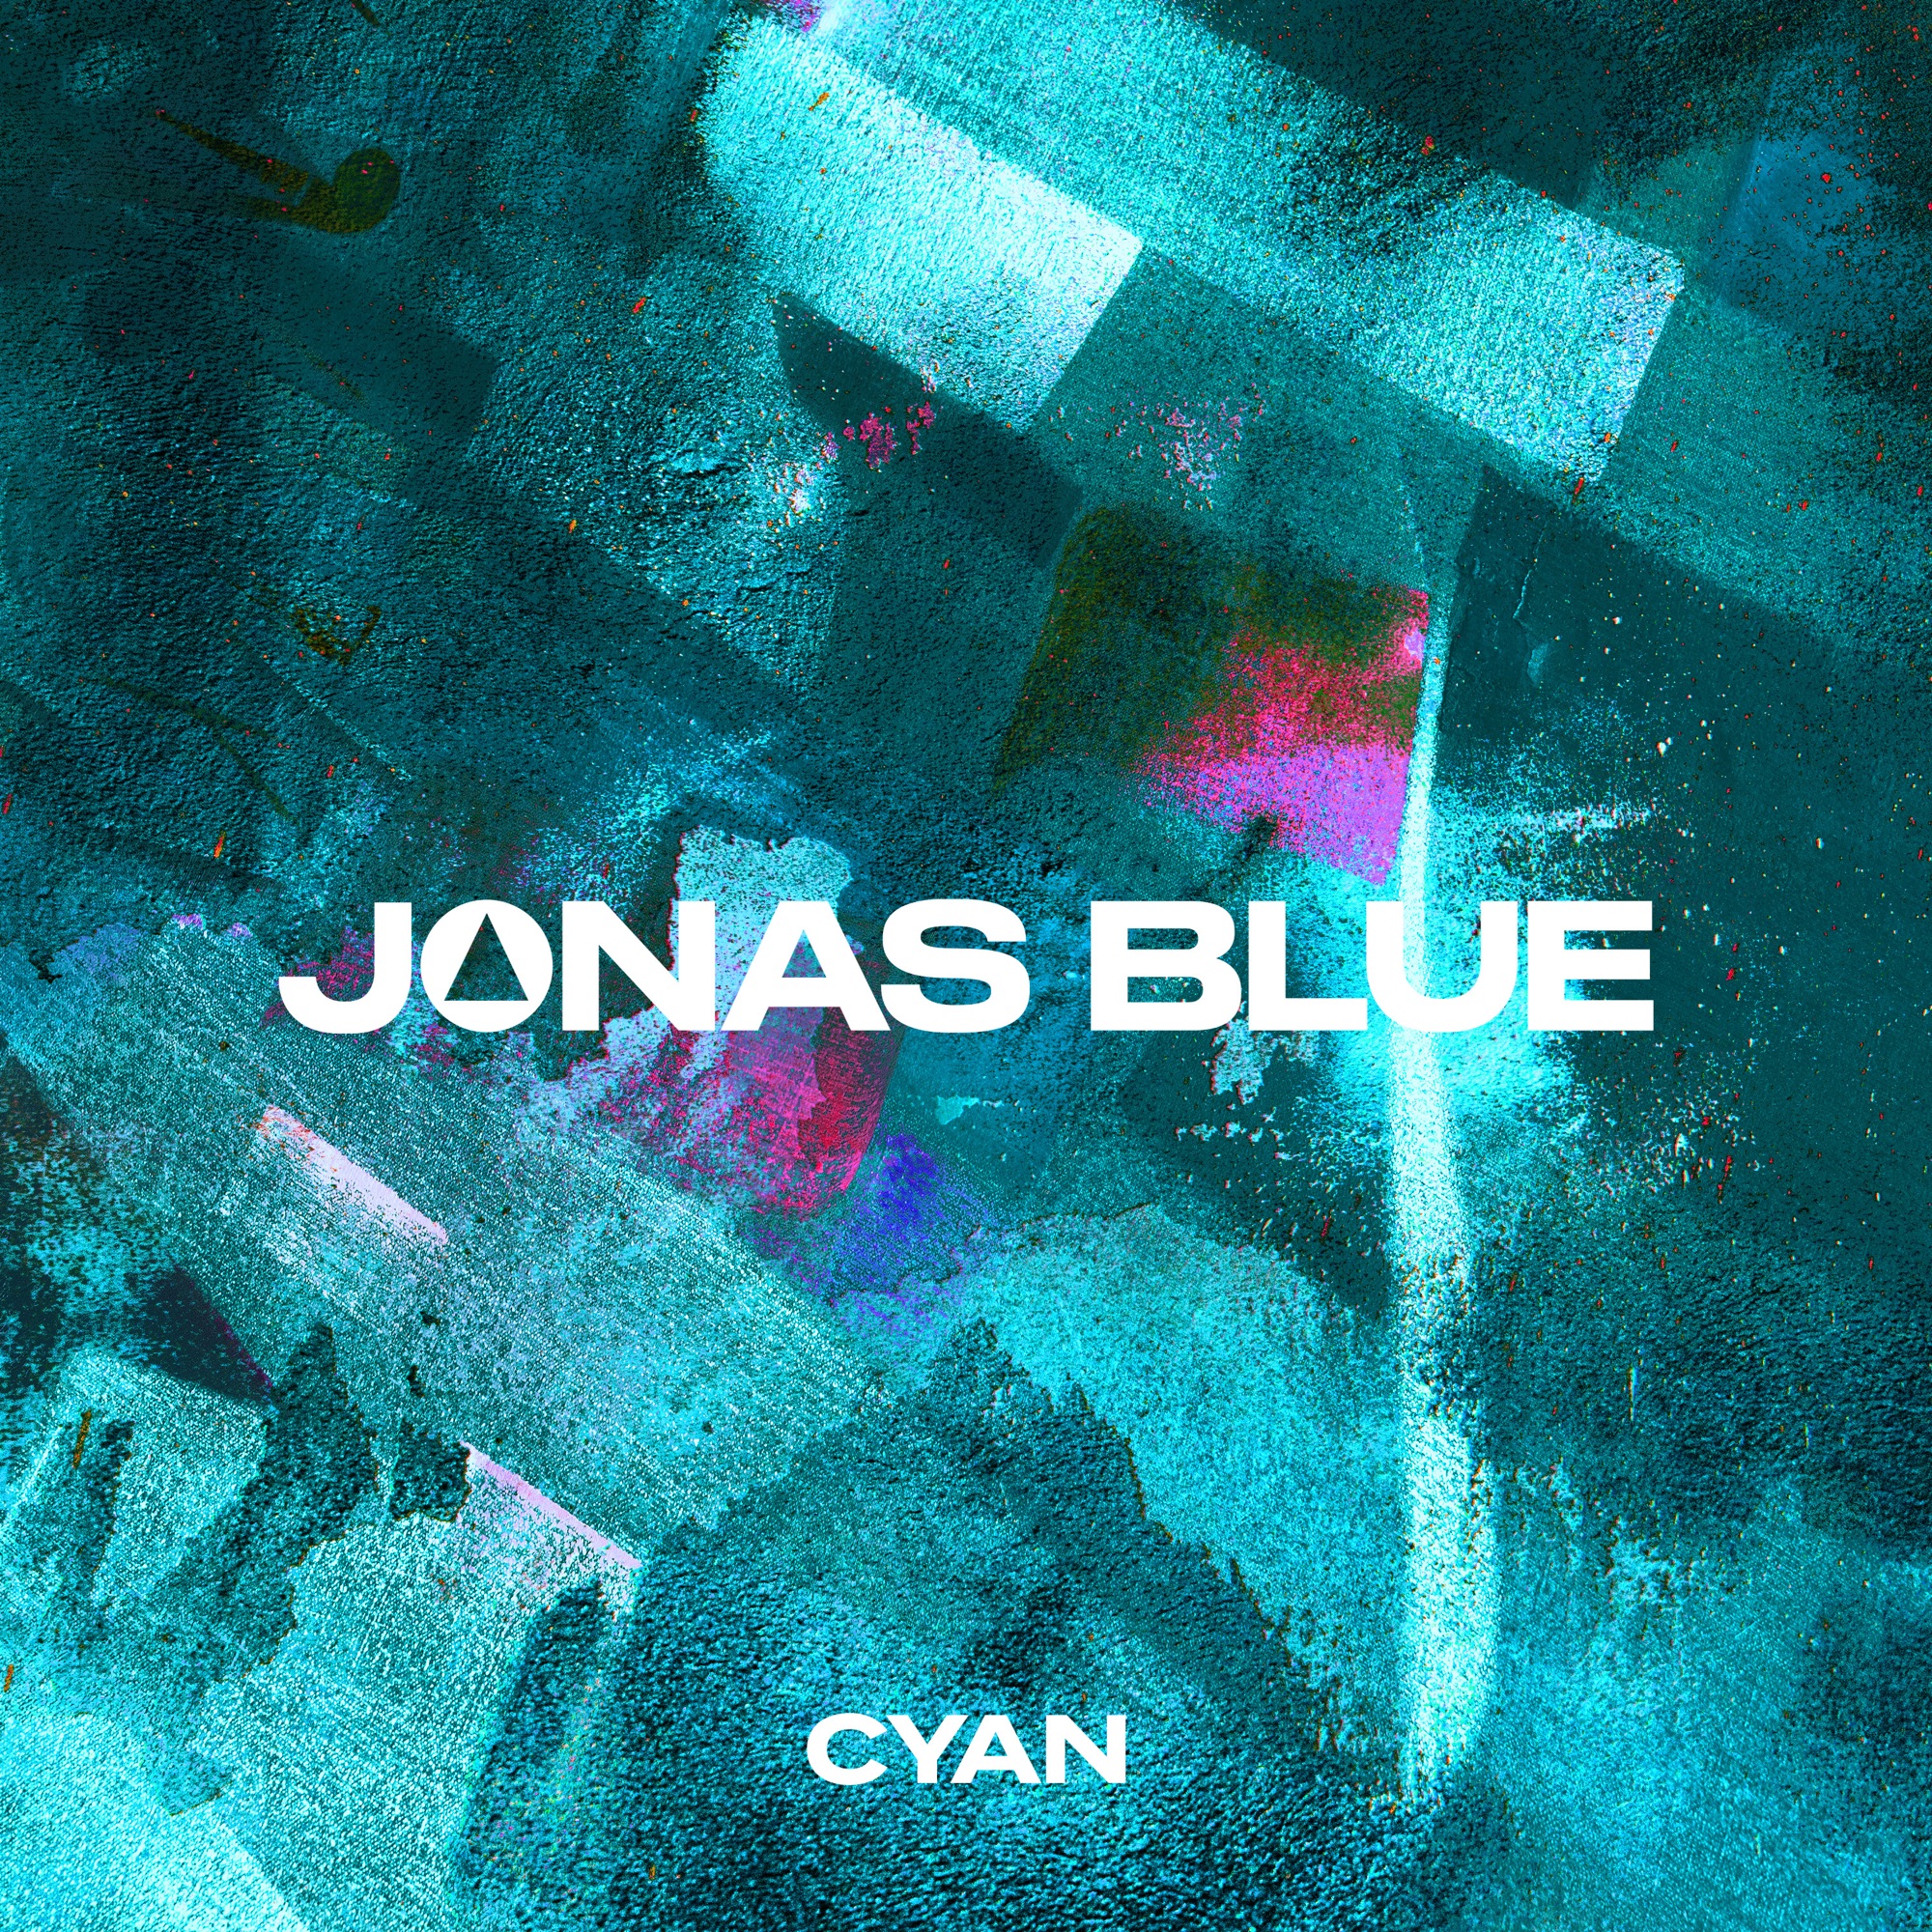 Jonas Blue - Cyan - EP